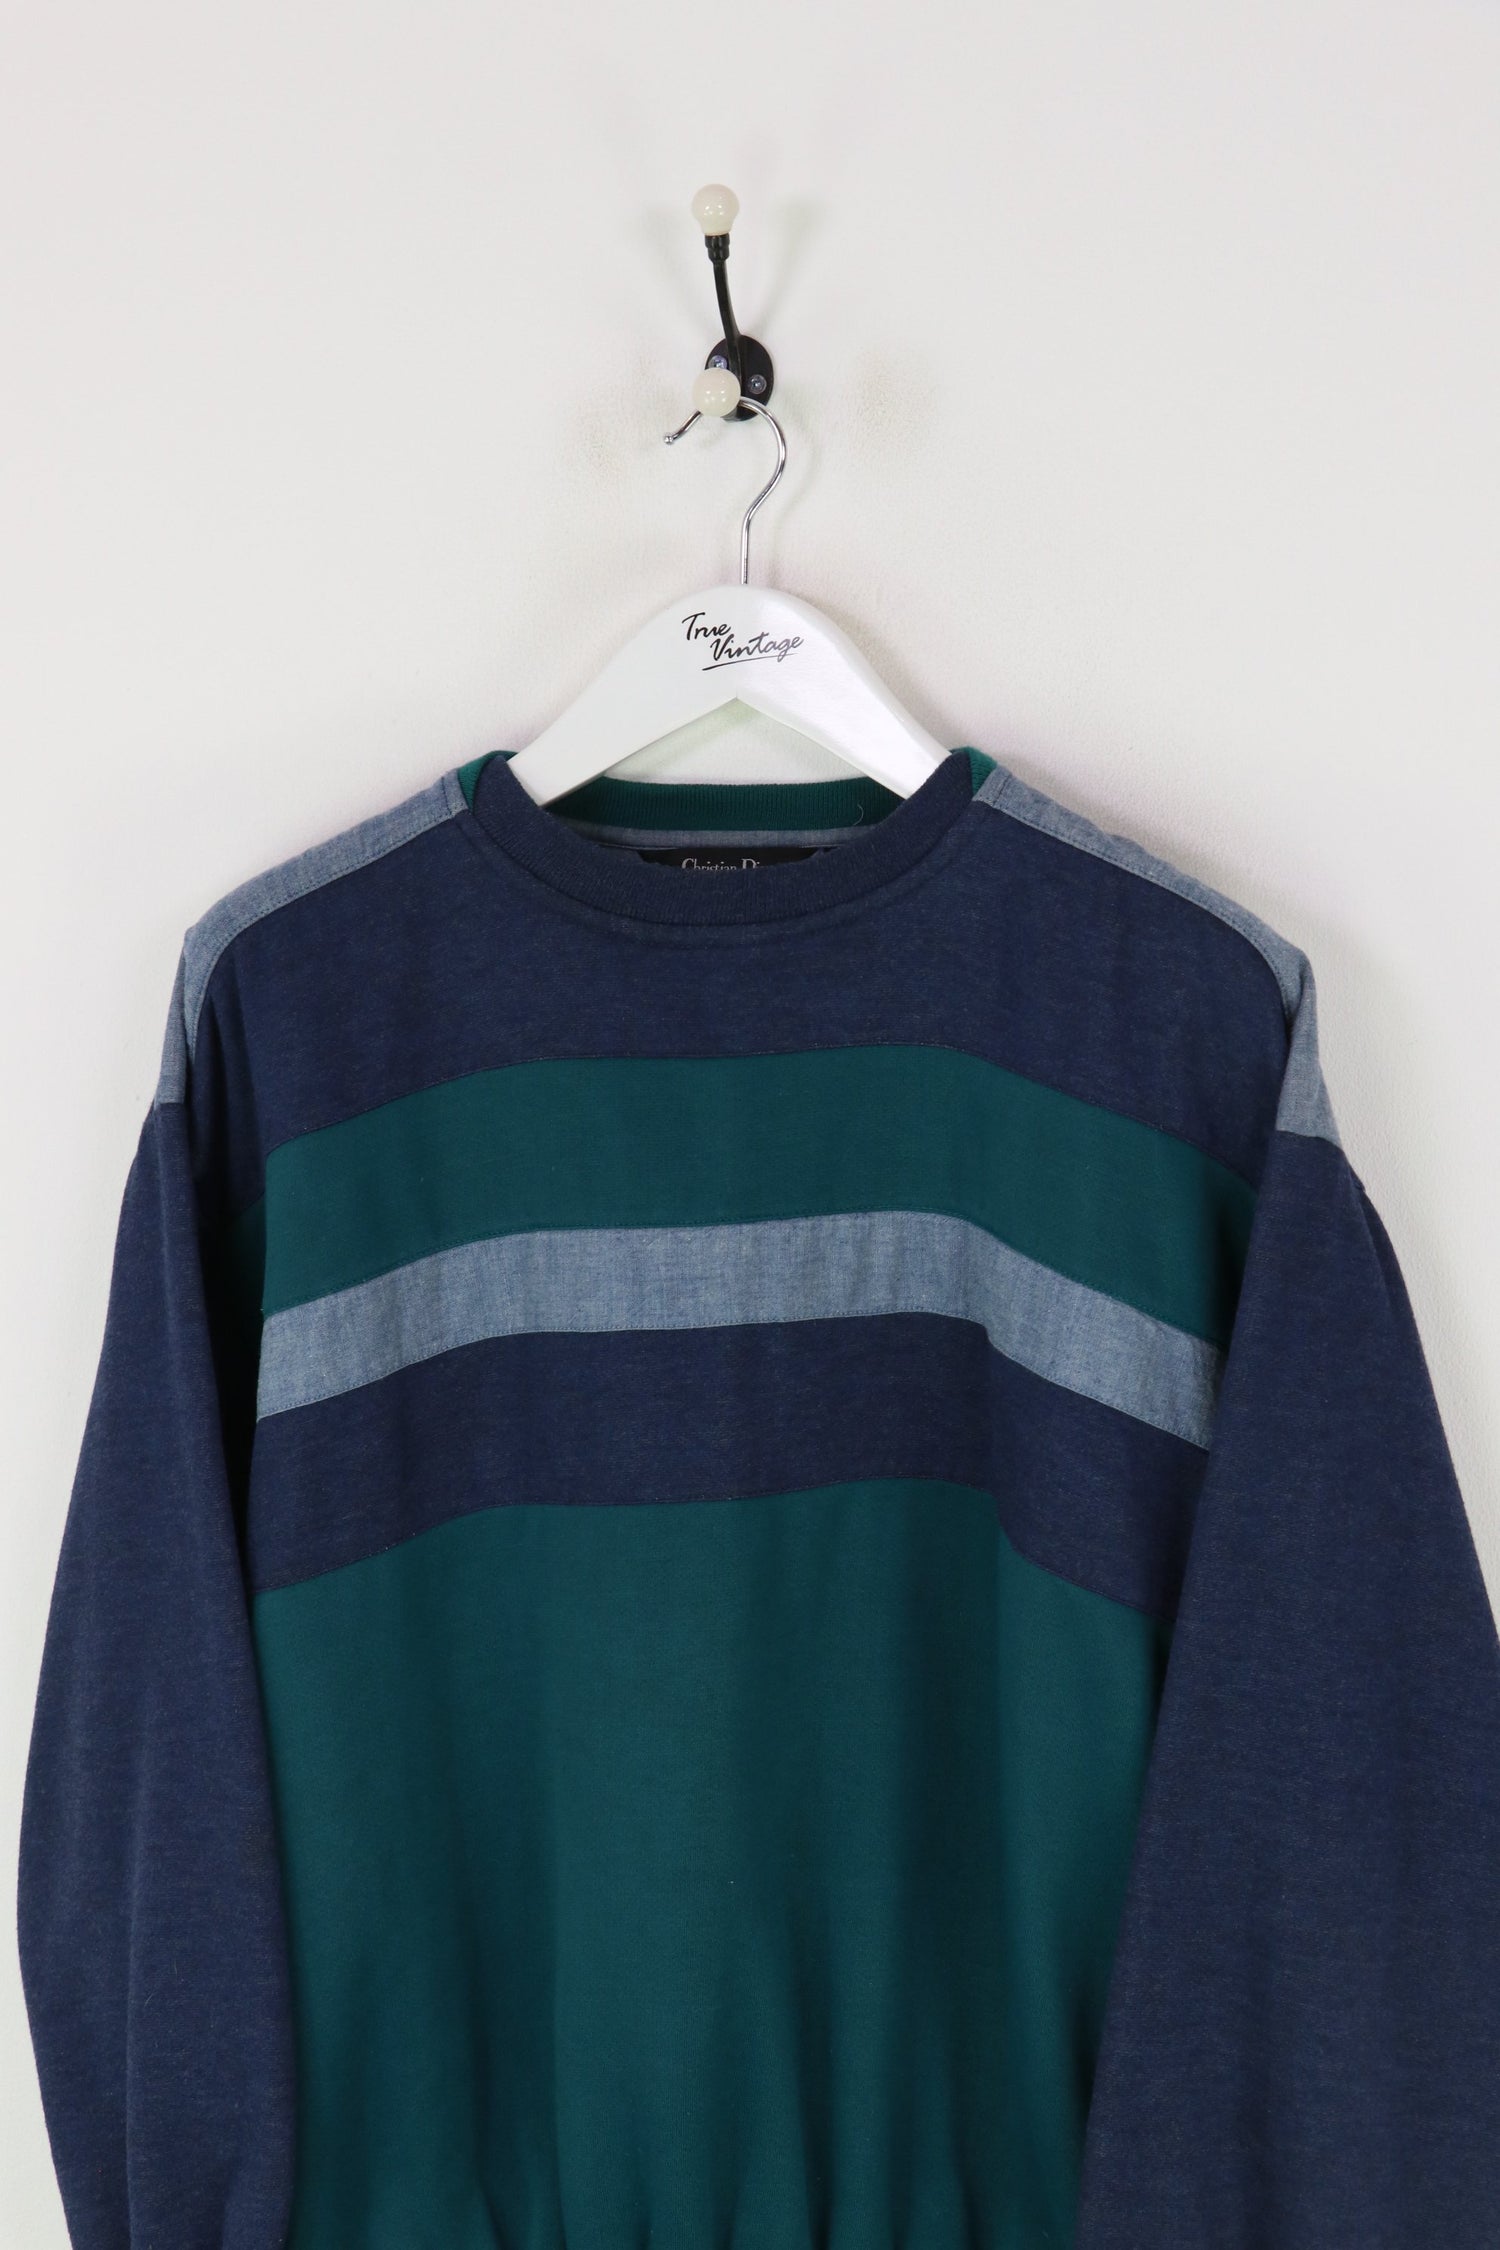 Christian Dior Sweatshirt Green/Navy Large